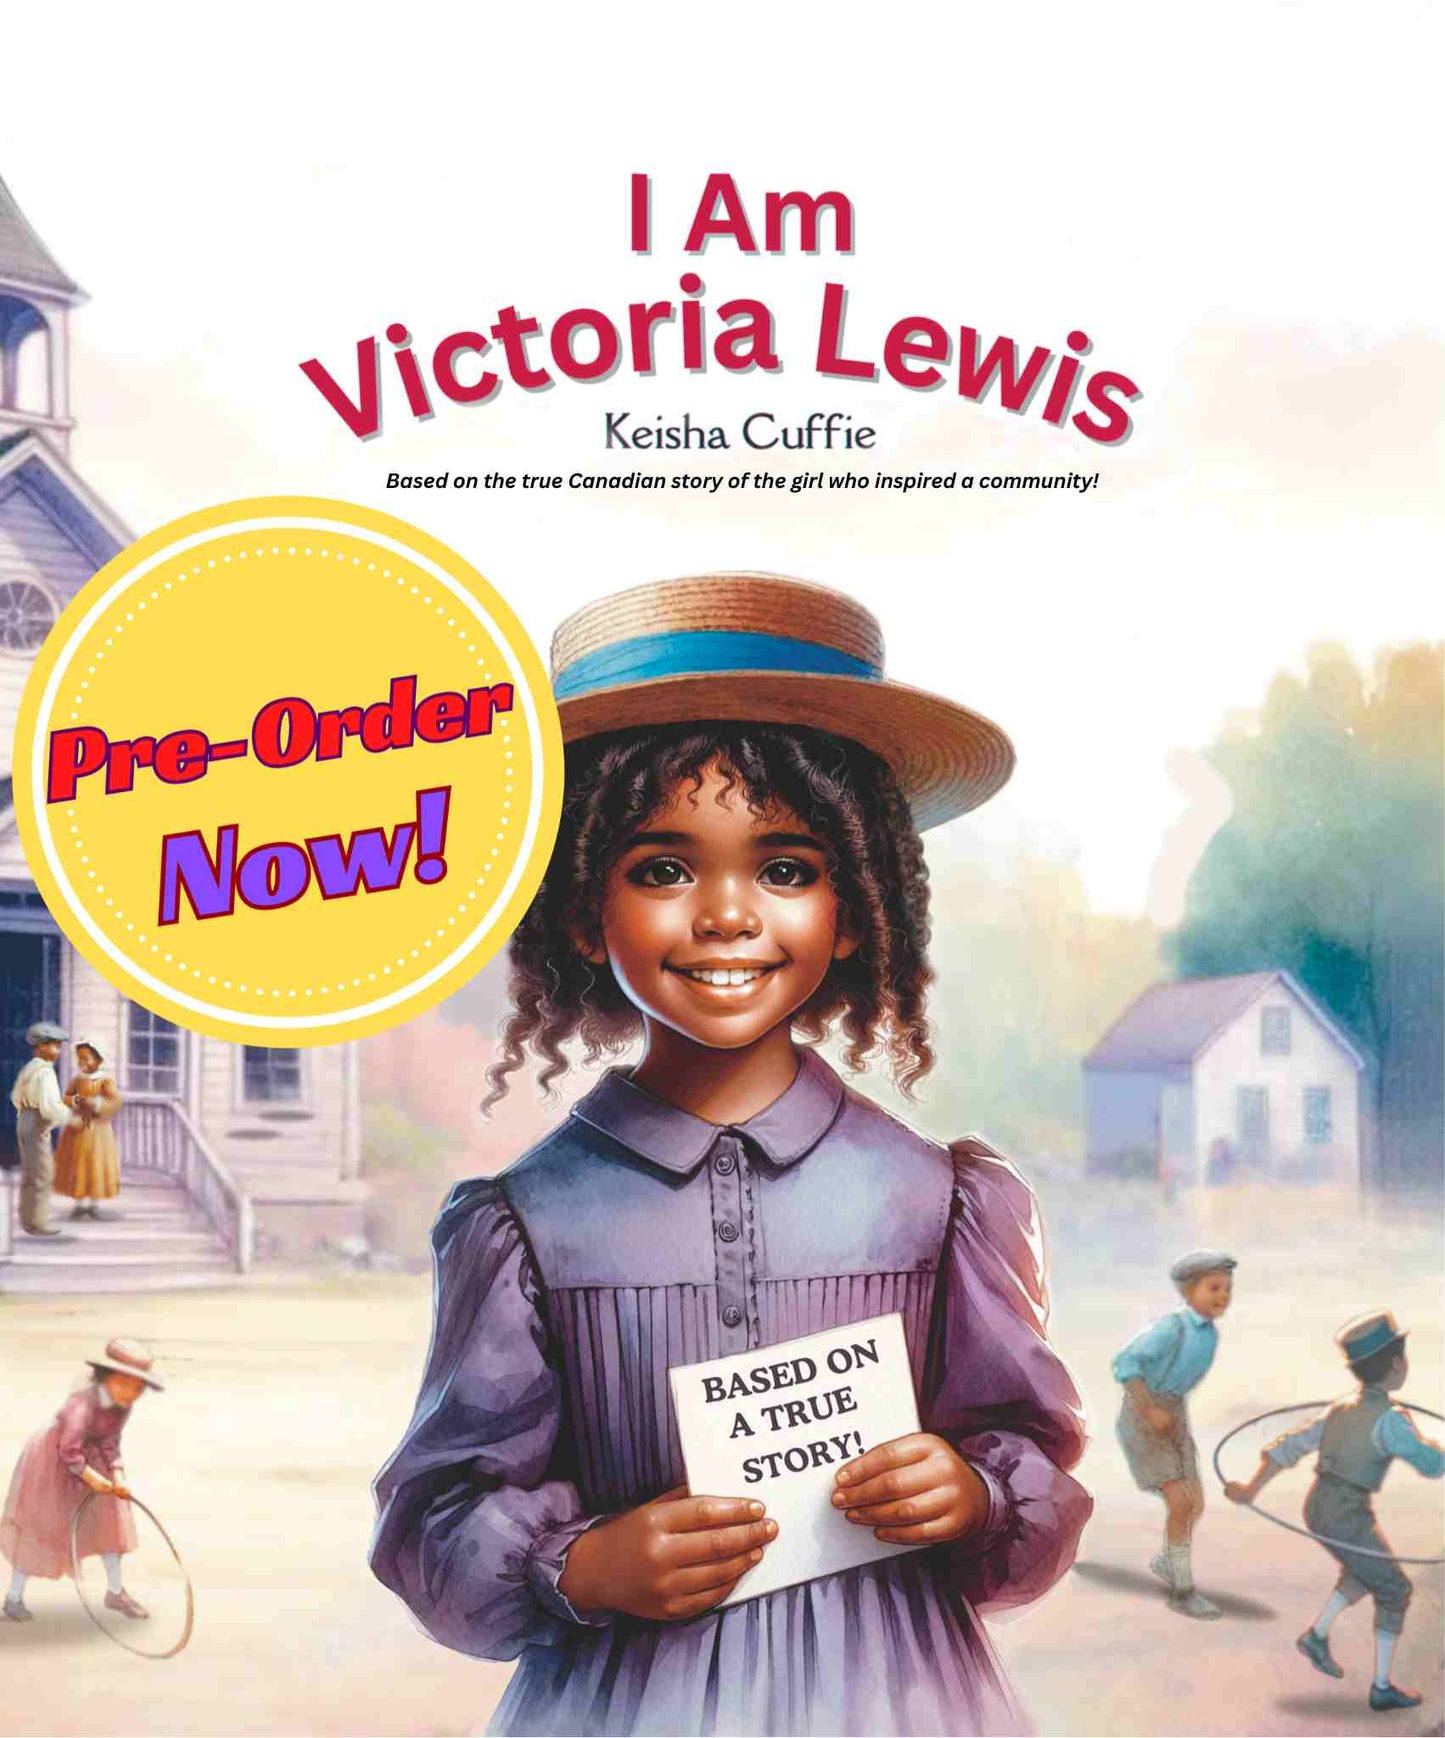 Pre-Order "I Am Victoria Lewis"